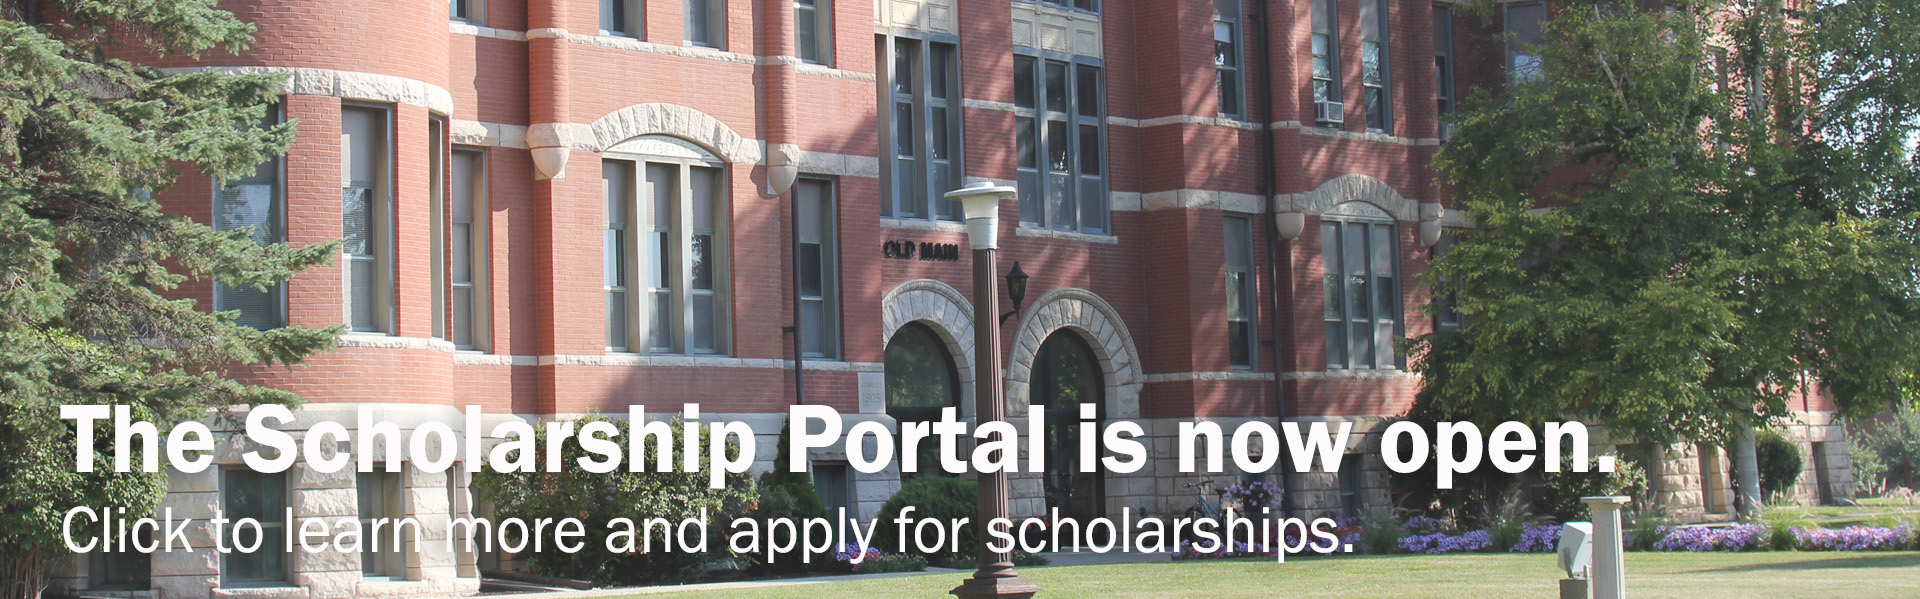 scholarship portal open image.jpg